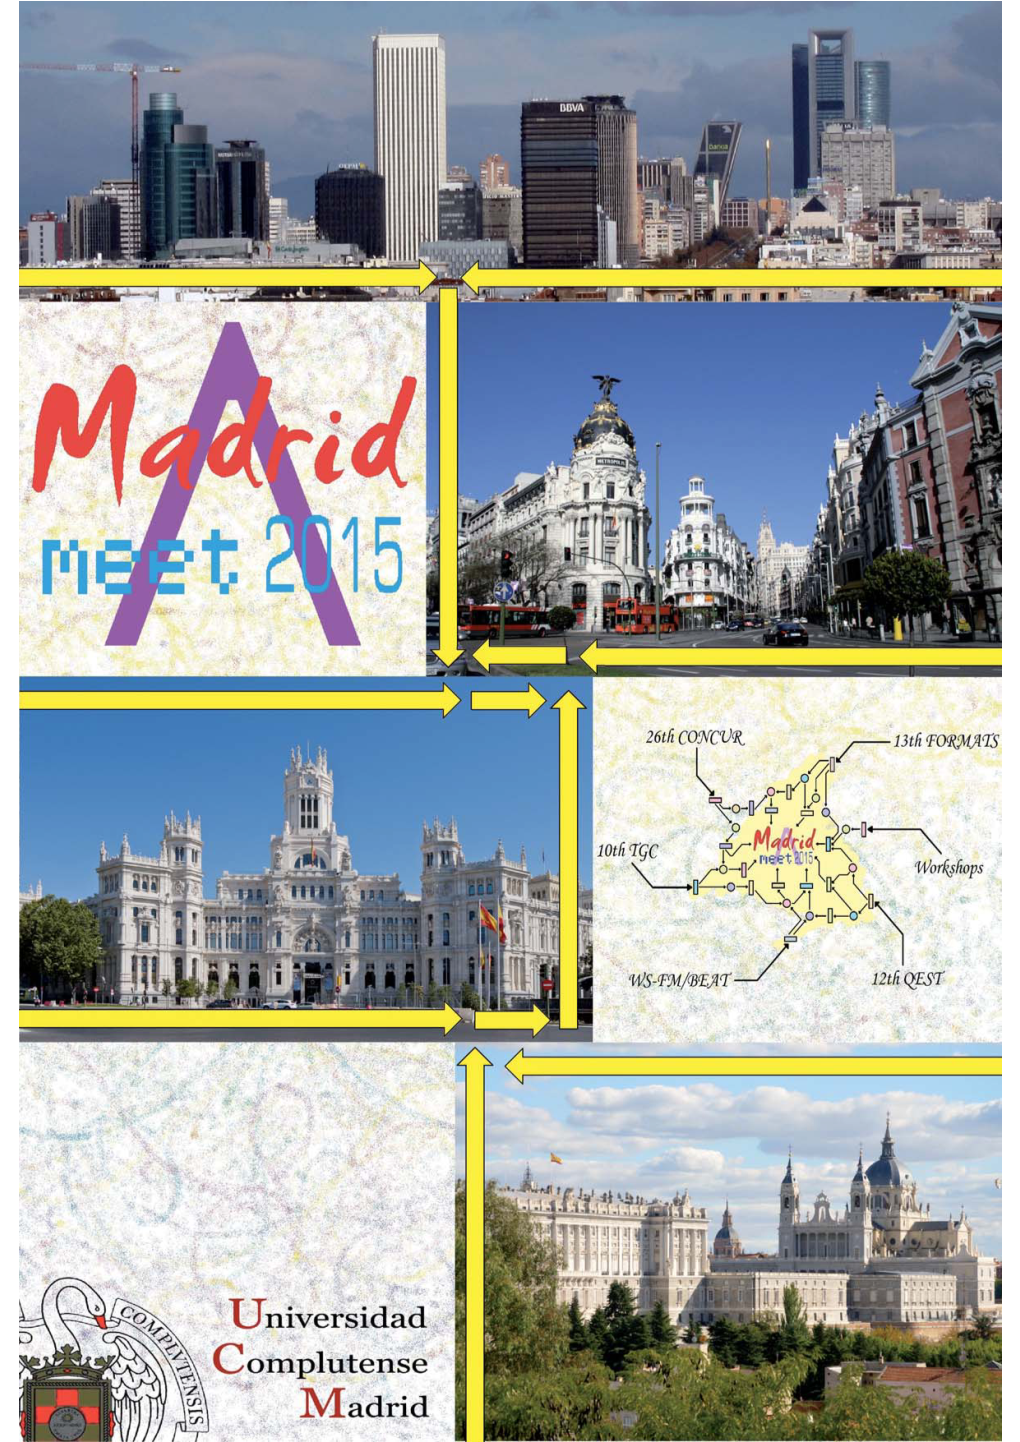 Madrid Meet 2015 Brochure